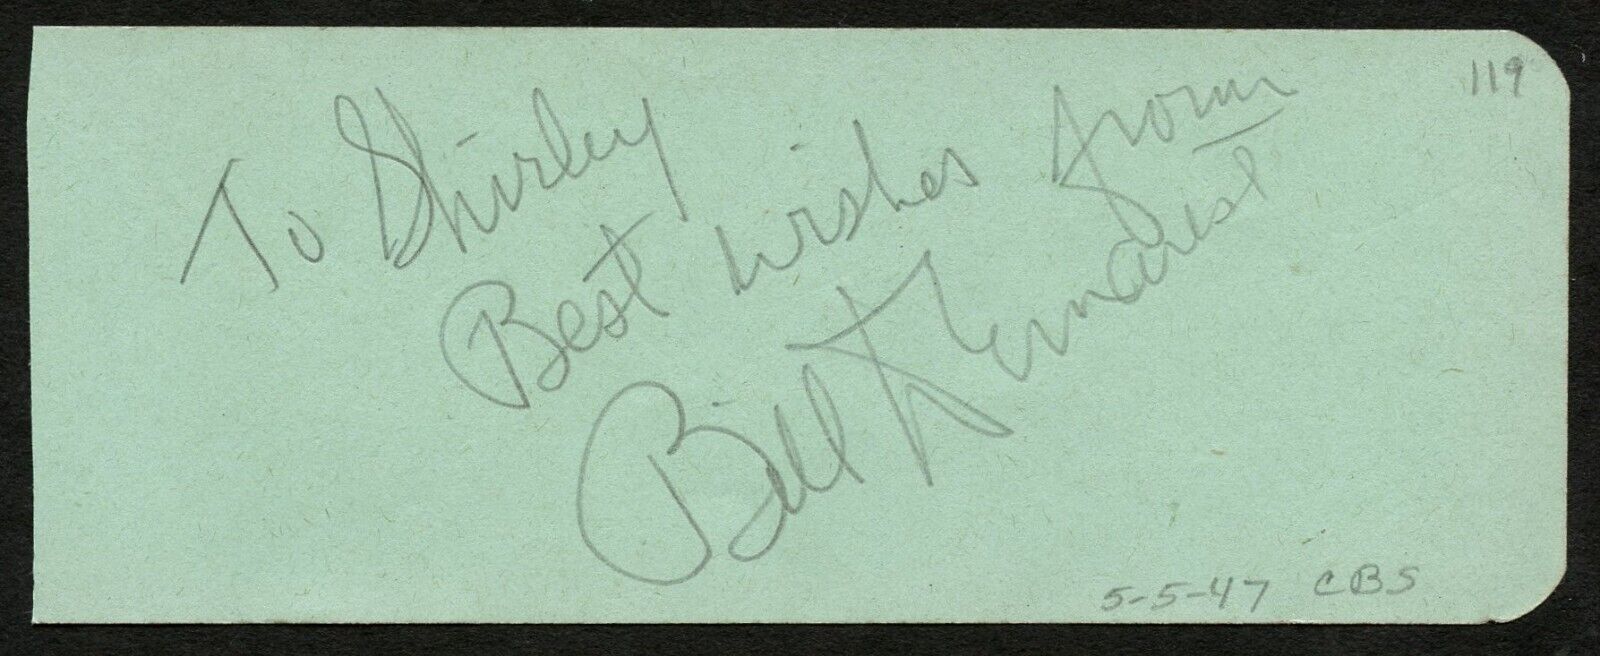 William Bill Demarest d1983 signed 2x5 cut autograph on 5-5-47 CBS Playhouse LA